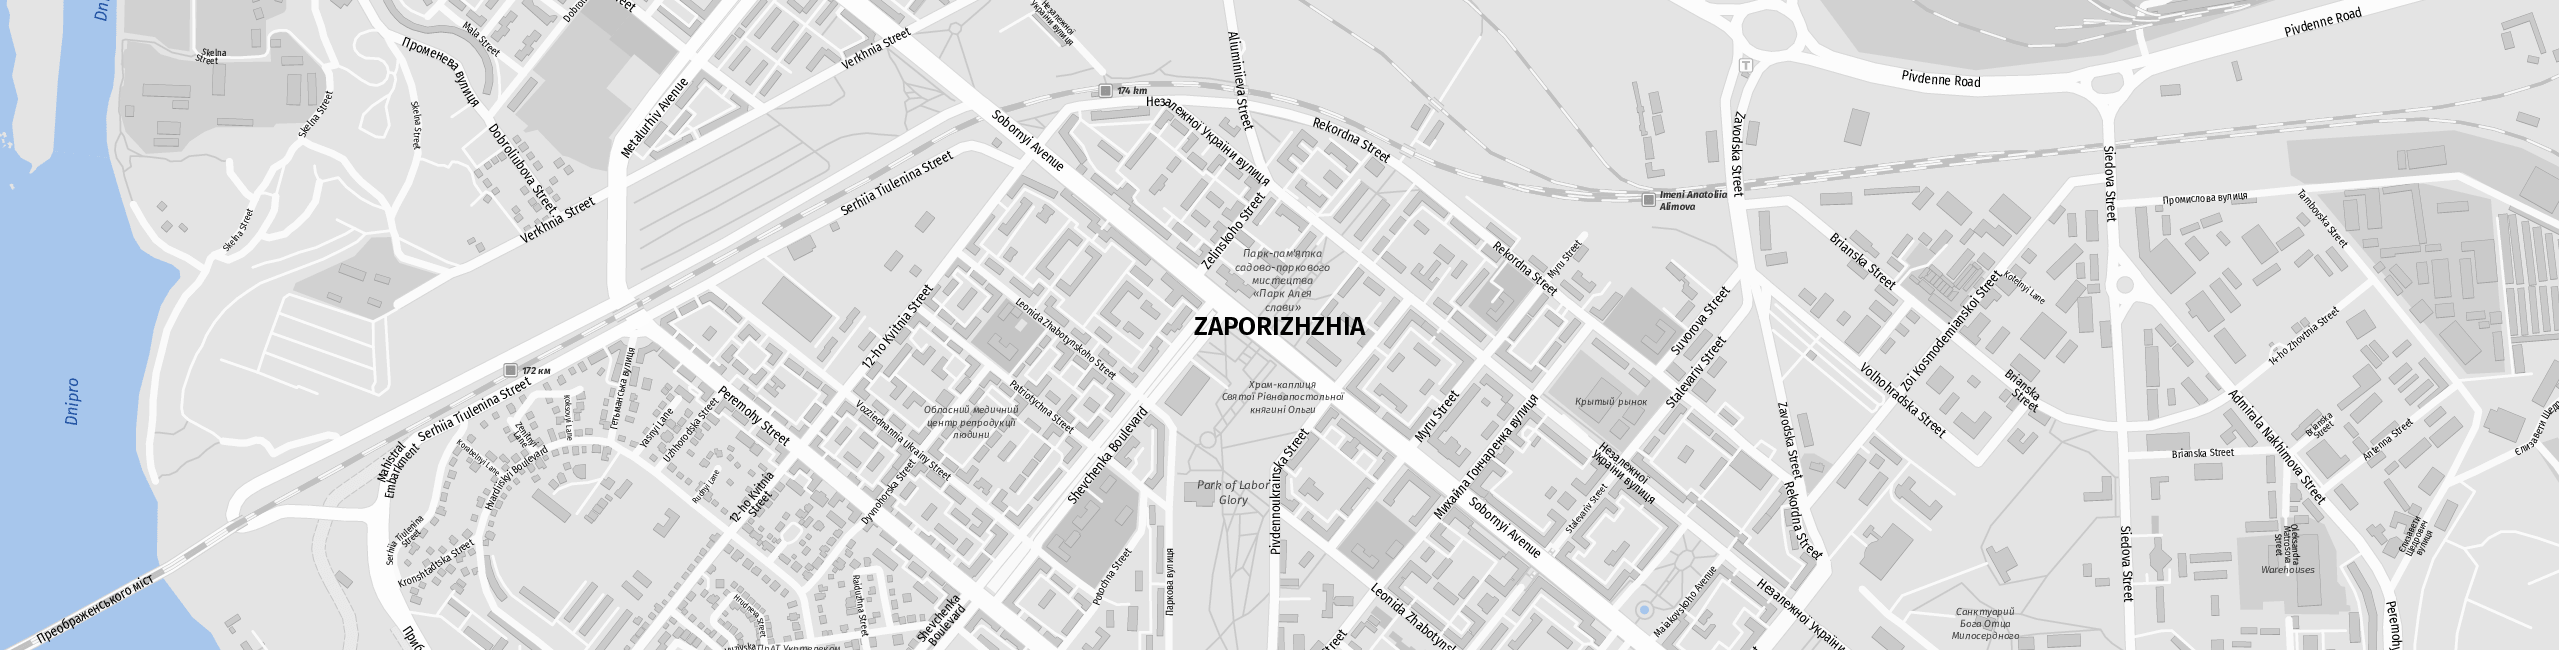 Stadtplan Saporischschja zum Downloaden.